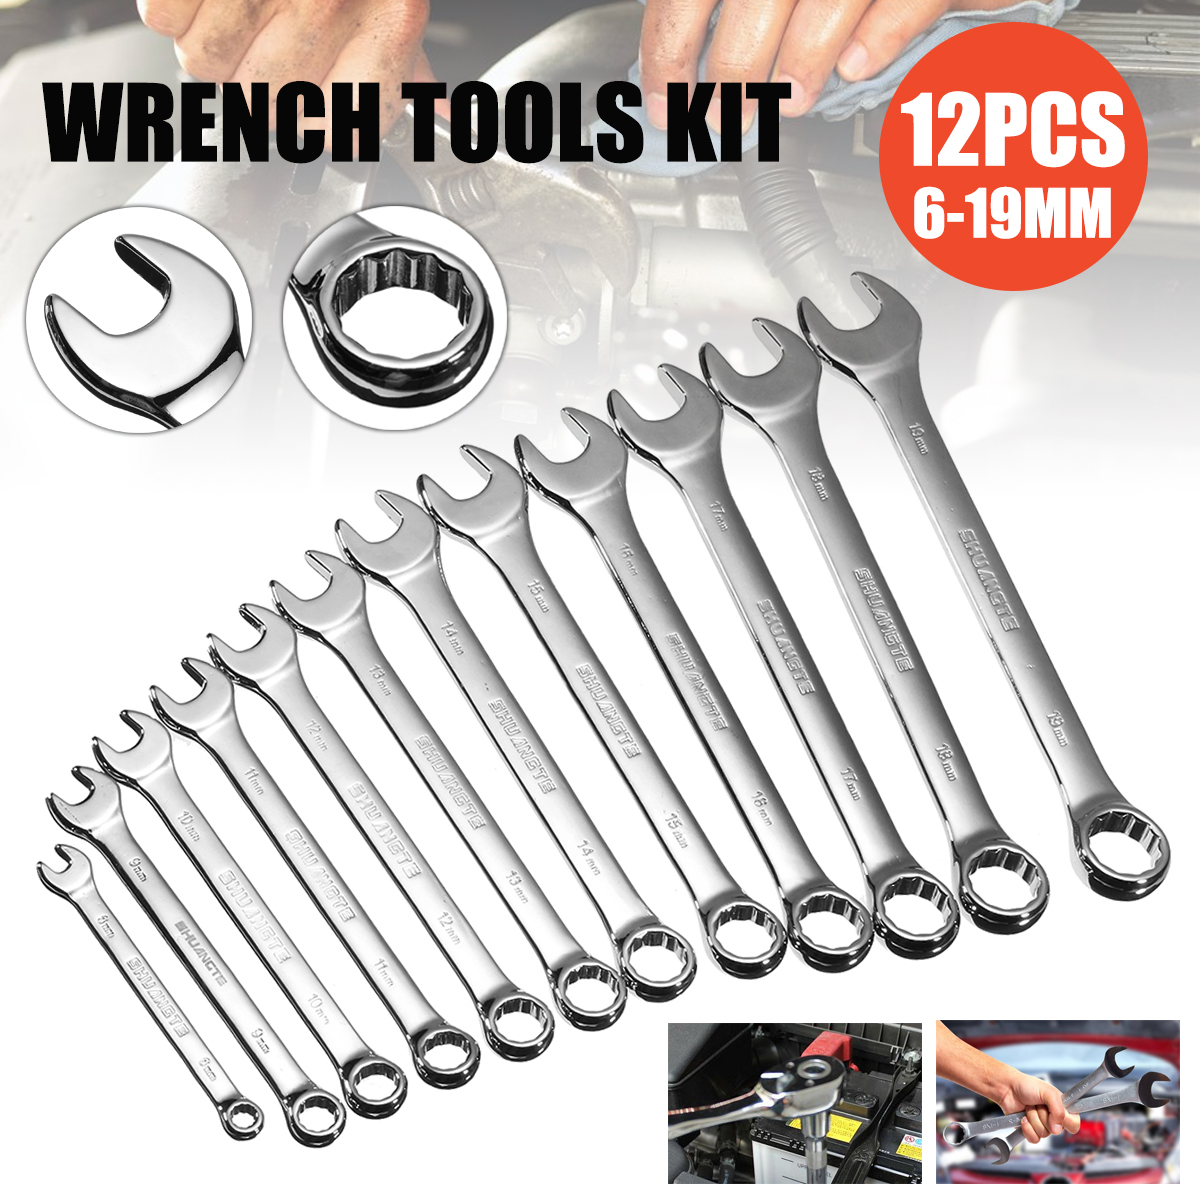 12pcs-Spanners-Wrench-Chrome-Vanadium-Steel-Polished-Tool-Set-Kit-6-19mm-1262792-5